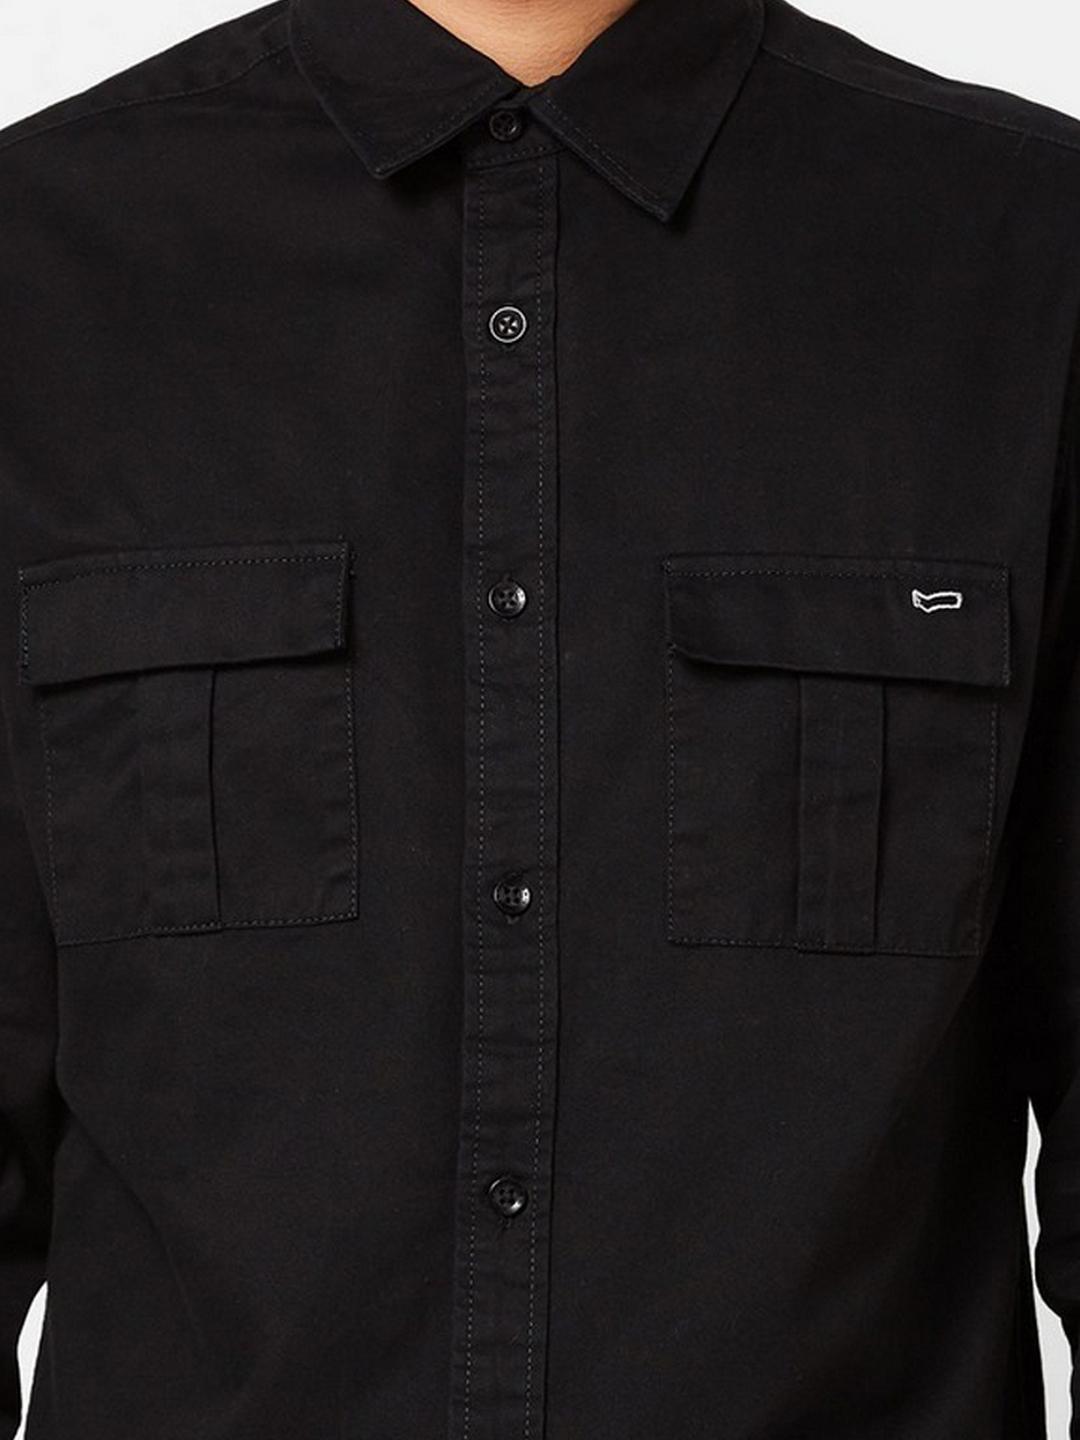 Men's Abner solid black shirt